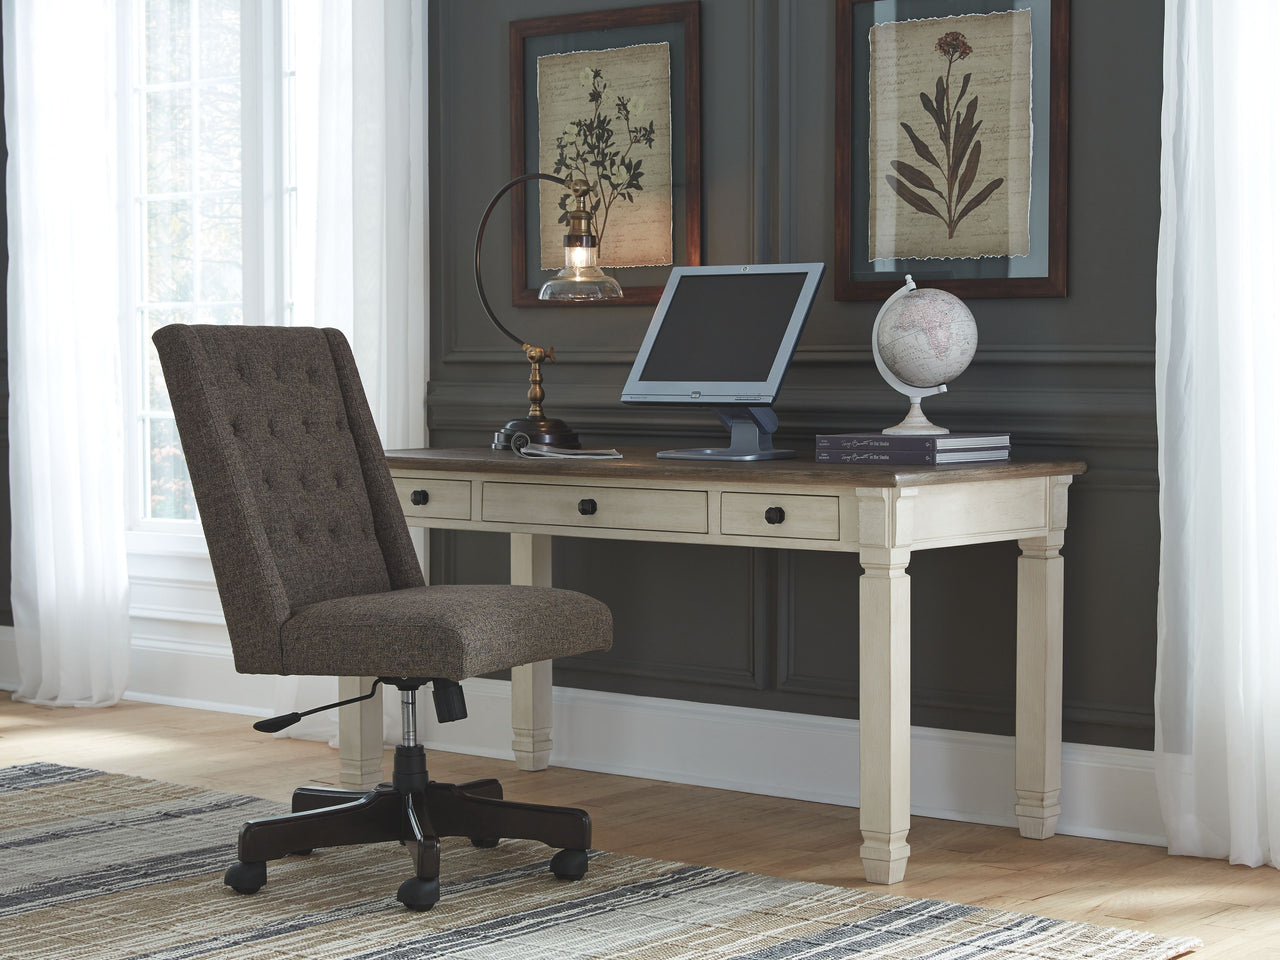 Bolanburg - White / Brown / Beige - Home Office Desk - Tony's Home Furnishings